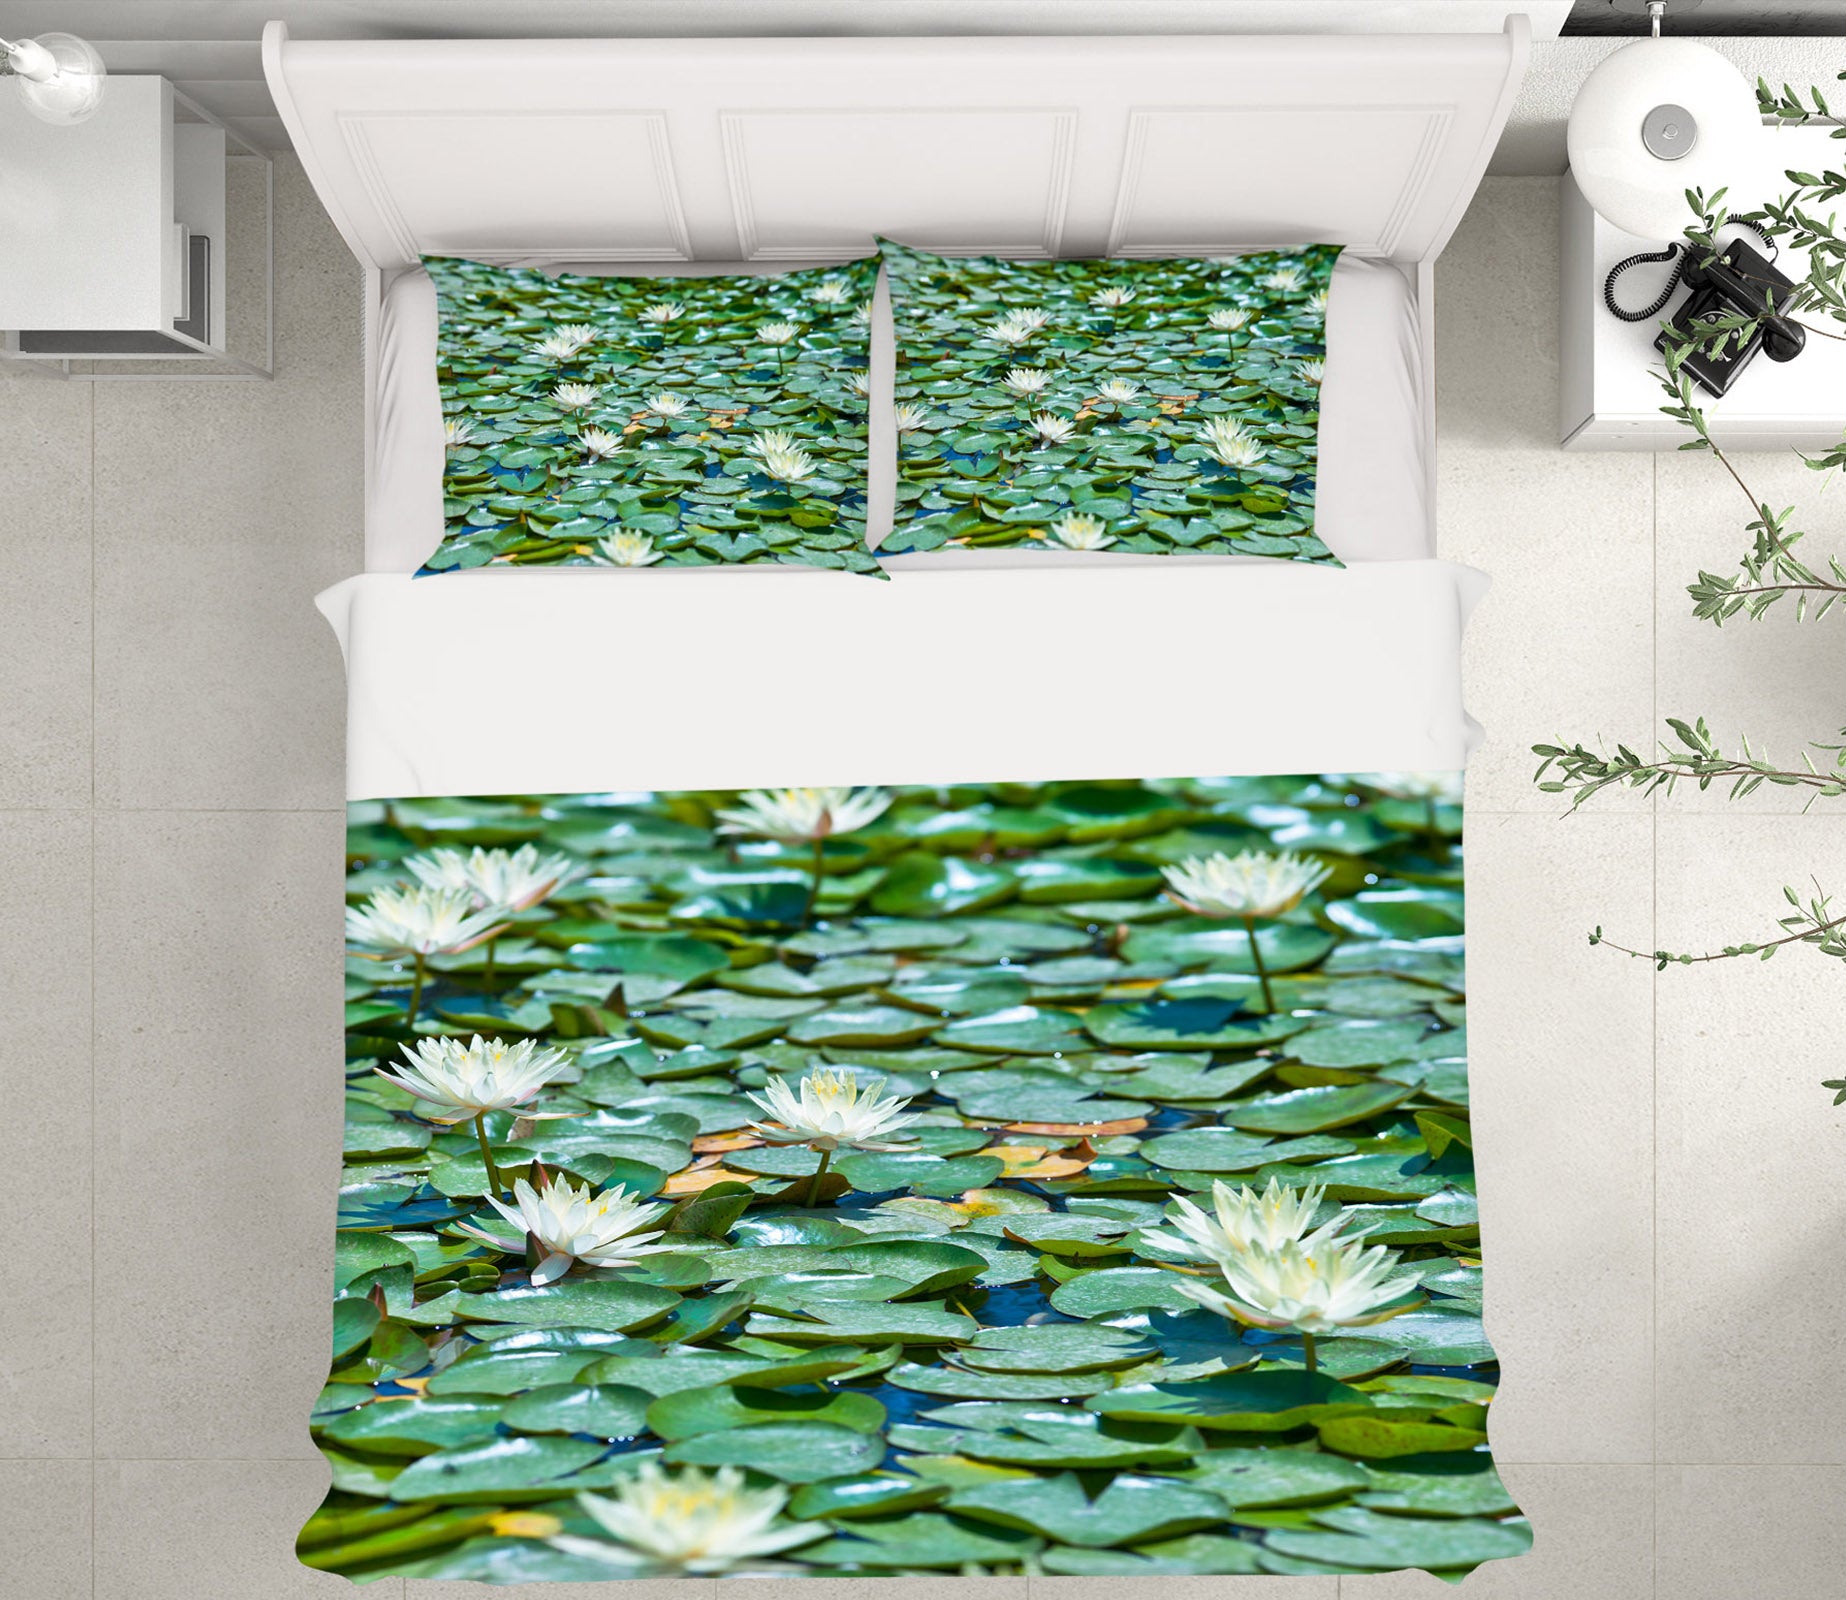 3D Lotus Pond 7110 Assaf Frank Bedding Bed Pillowcases Quilt Cover Duvet Cover